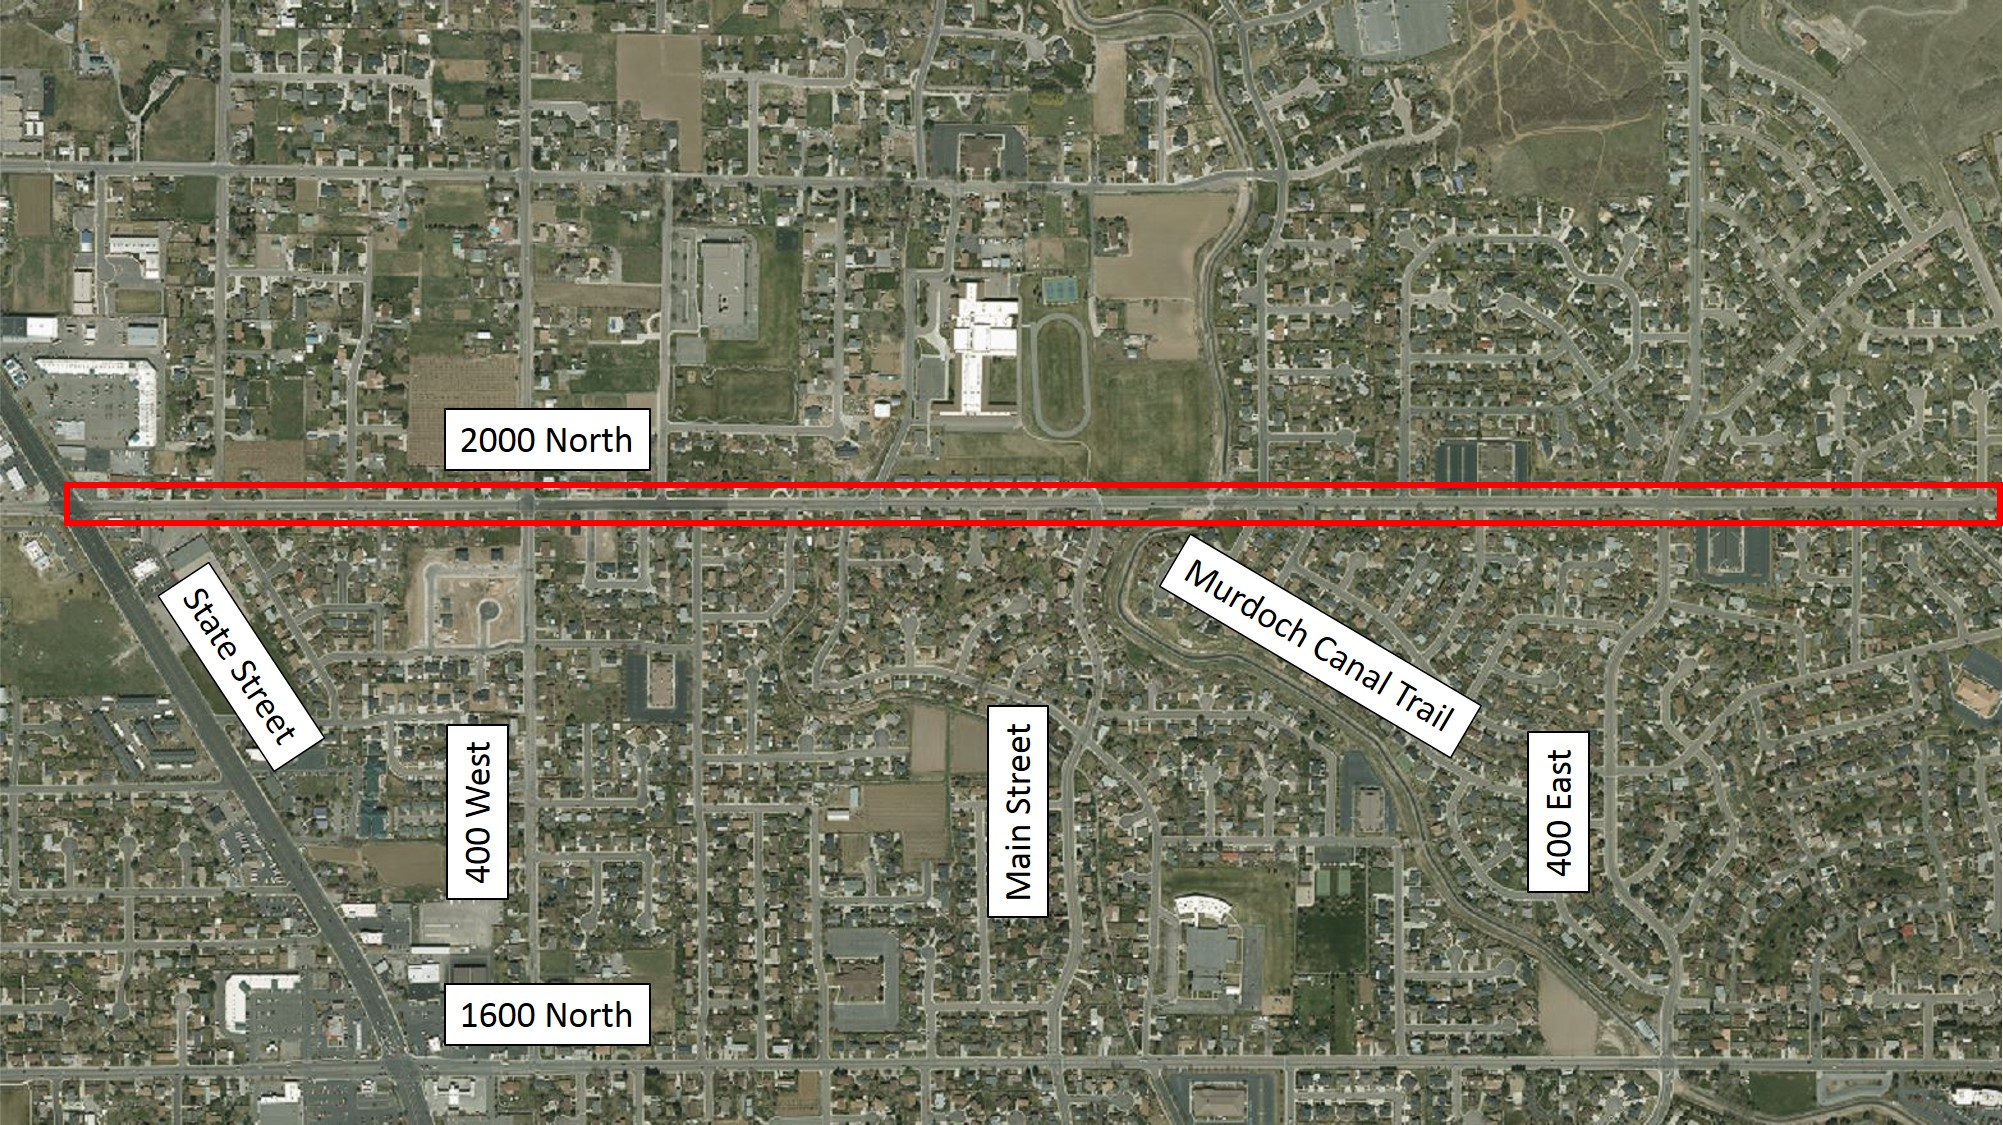 Neighborhood Plan: Northridge, Heatheridge & Windsor 2000 North Speed Limit